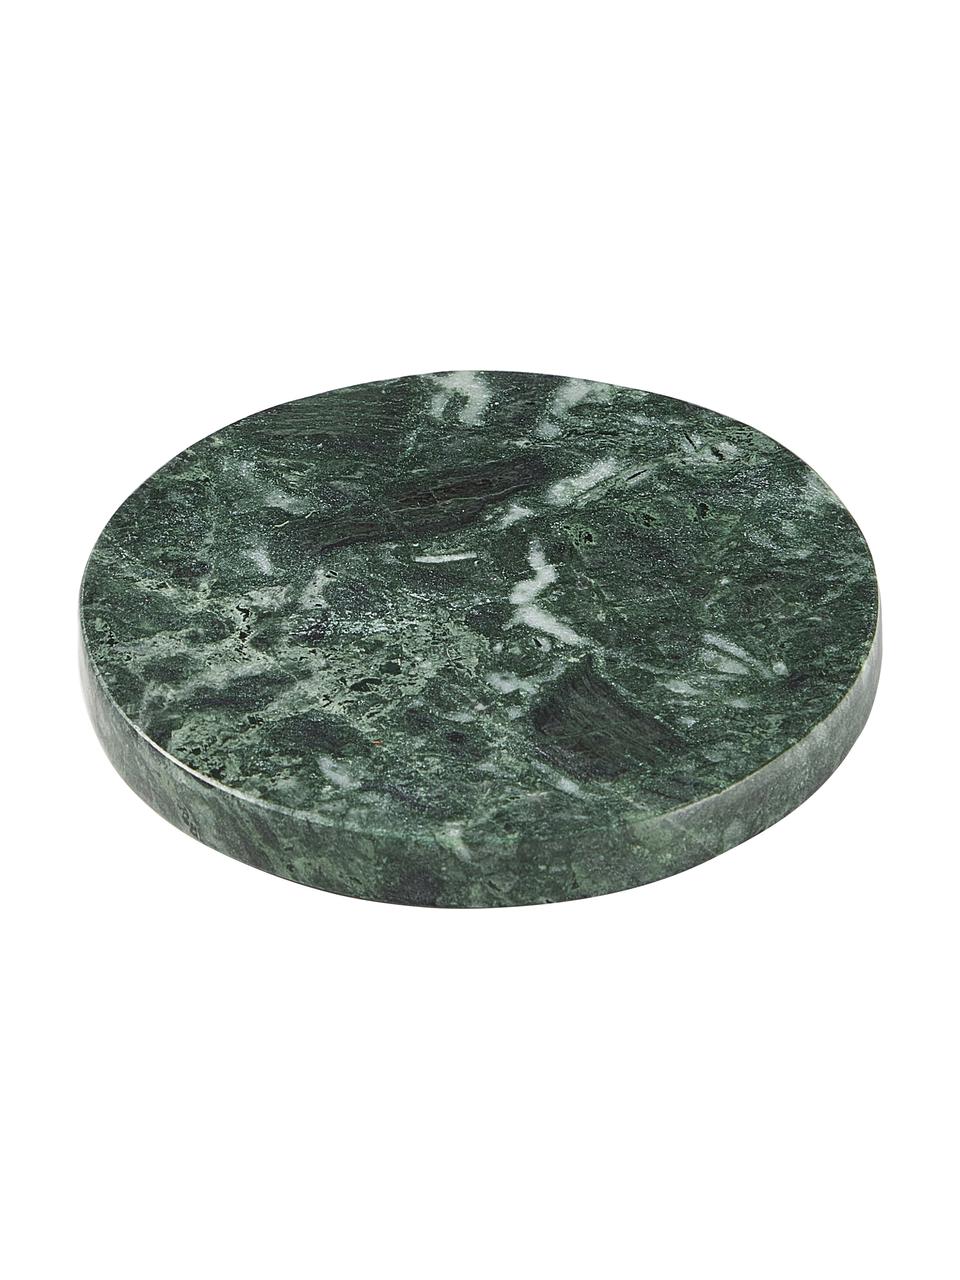 Podstawka z marmuru Callum, 4 szt., Marmur, Zielony marmur, Ø 10 x W 1 cm